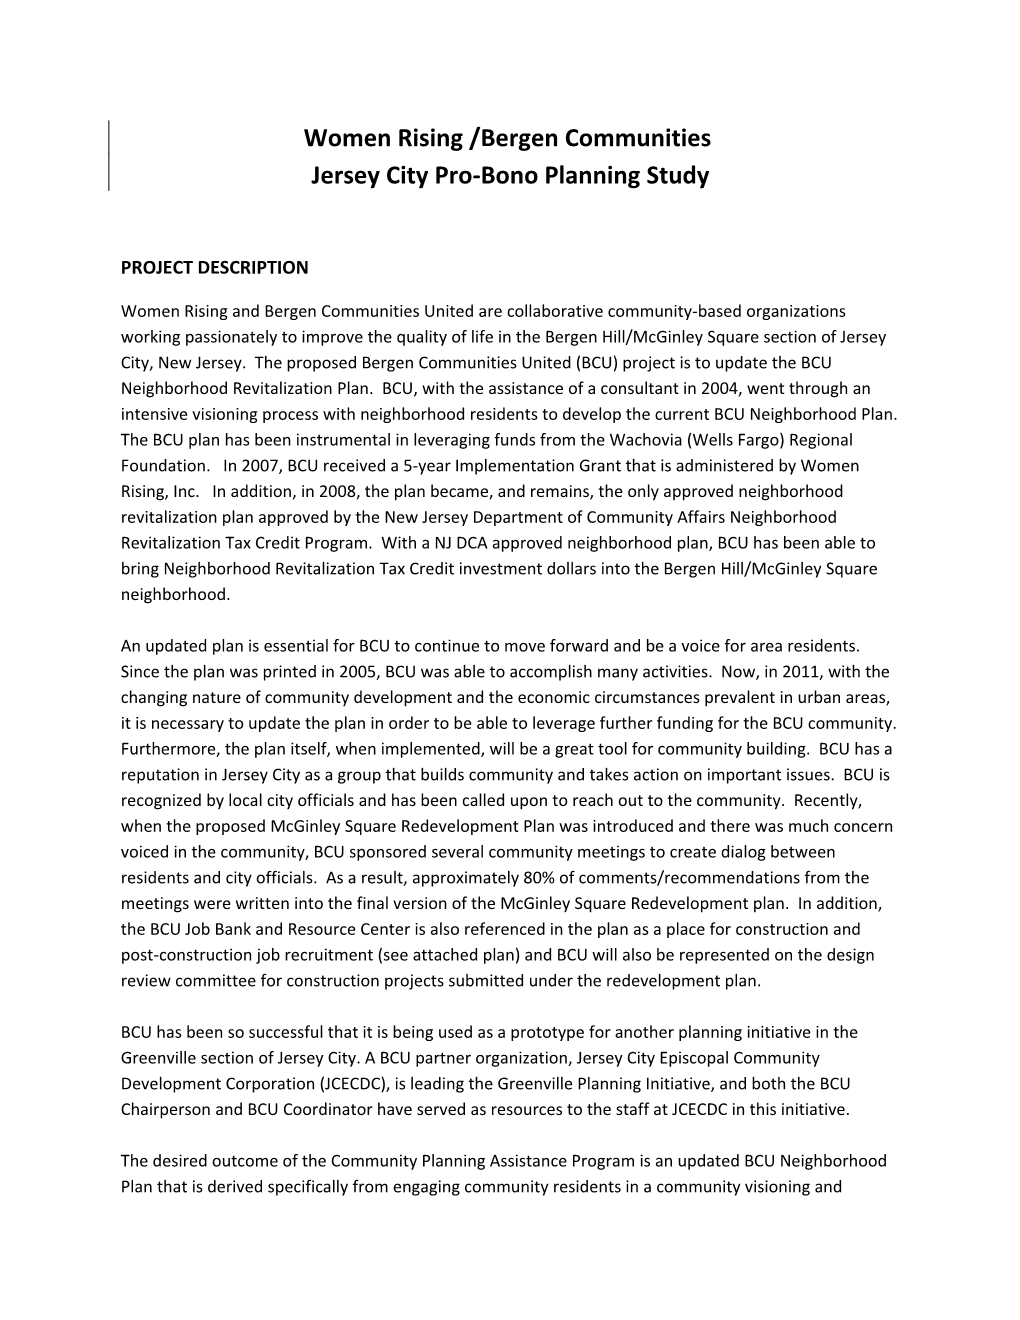 Women Rising /Bergen Communities Jersey City Pro-Bono Planning Study